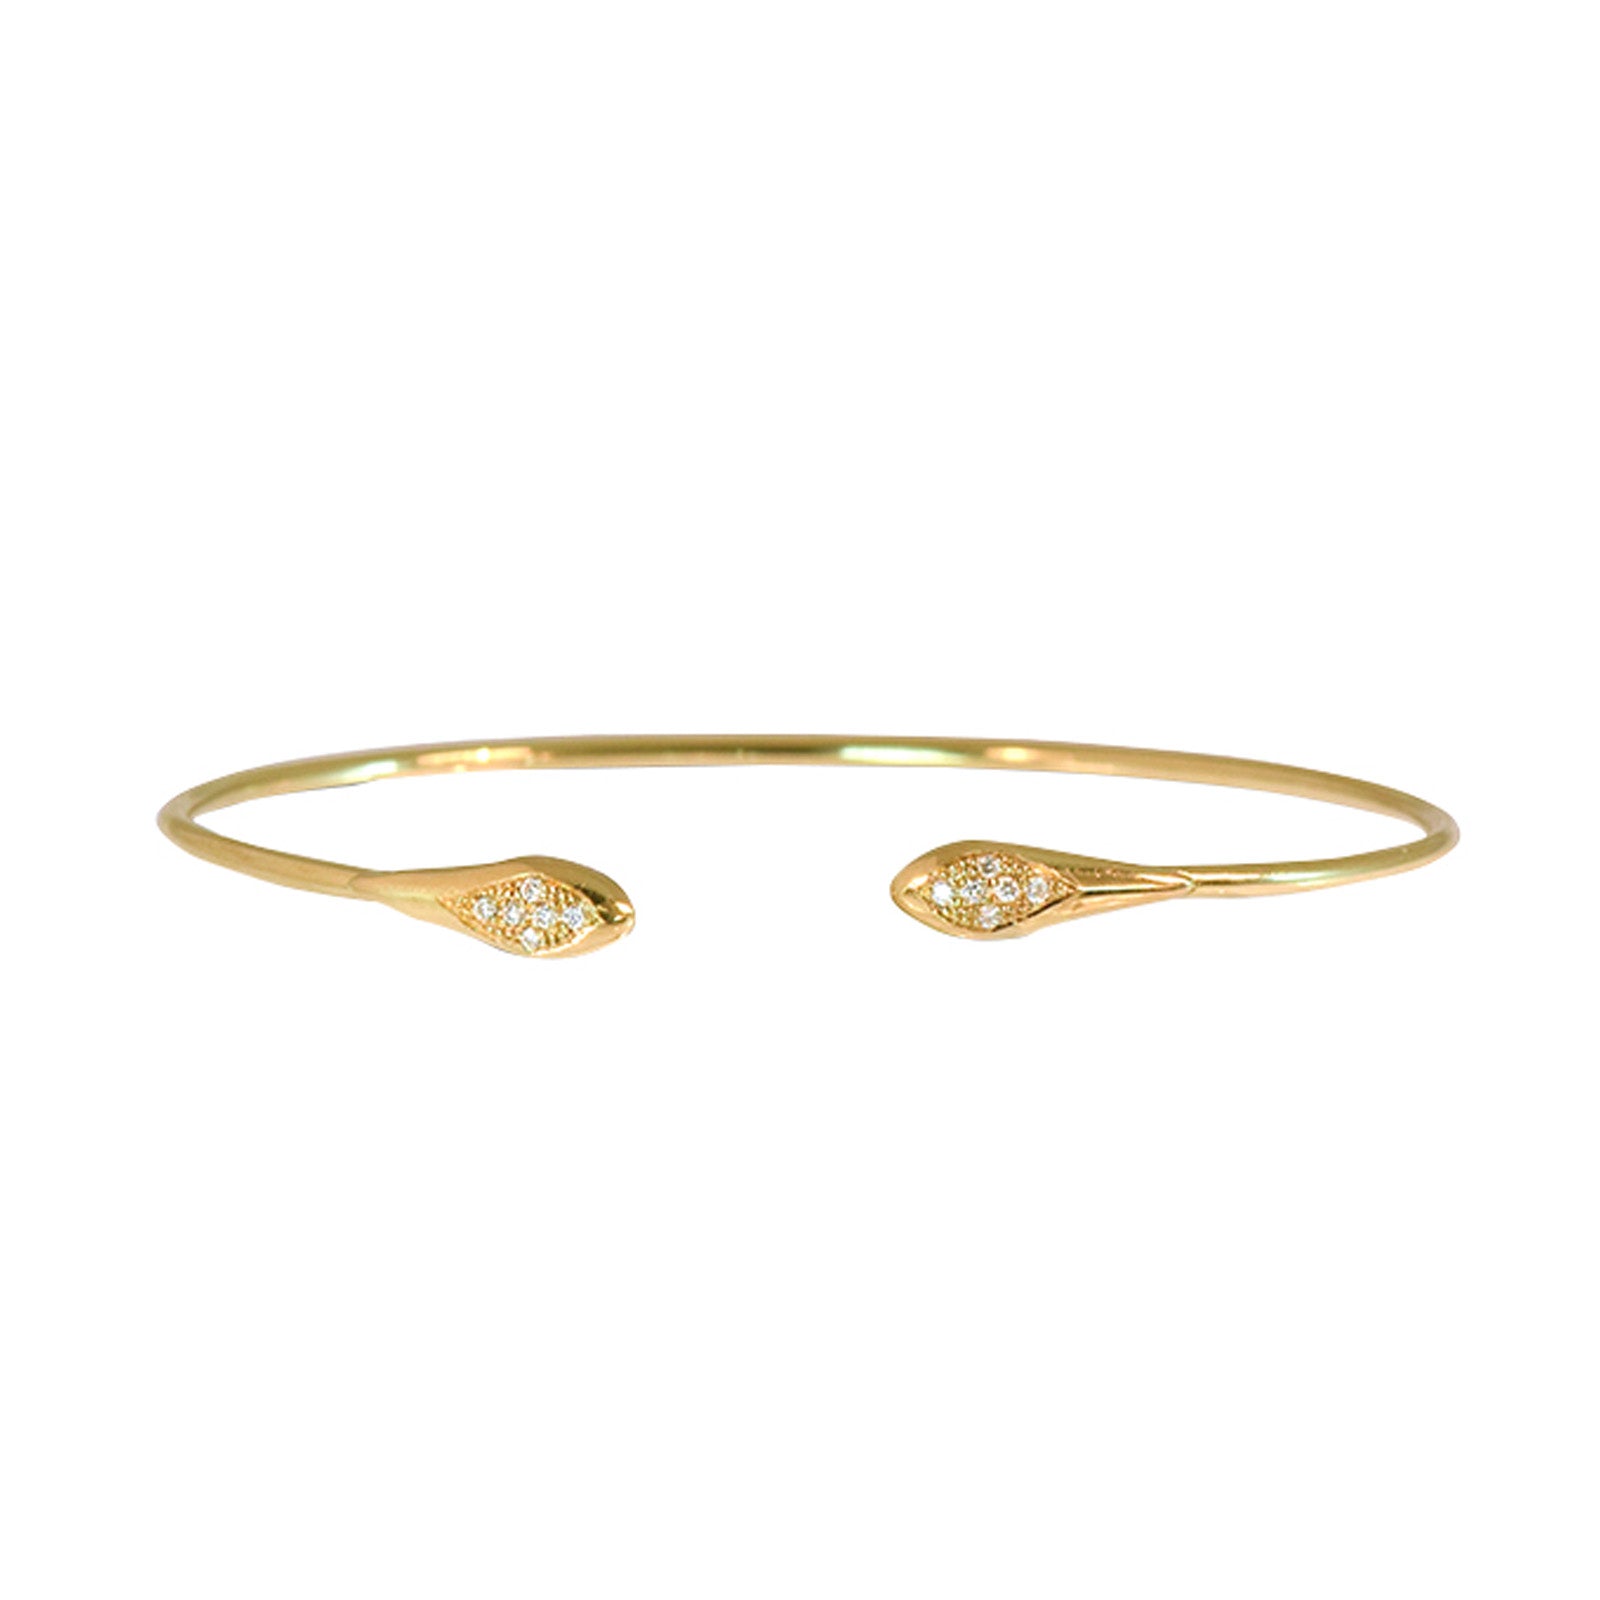 LALAOUNIS bangle bracelet in yellow gold